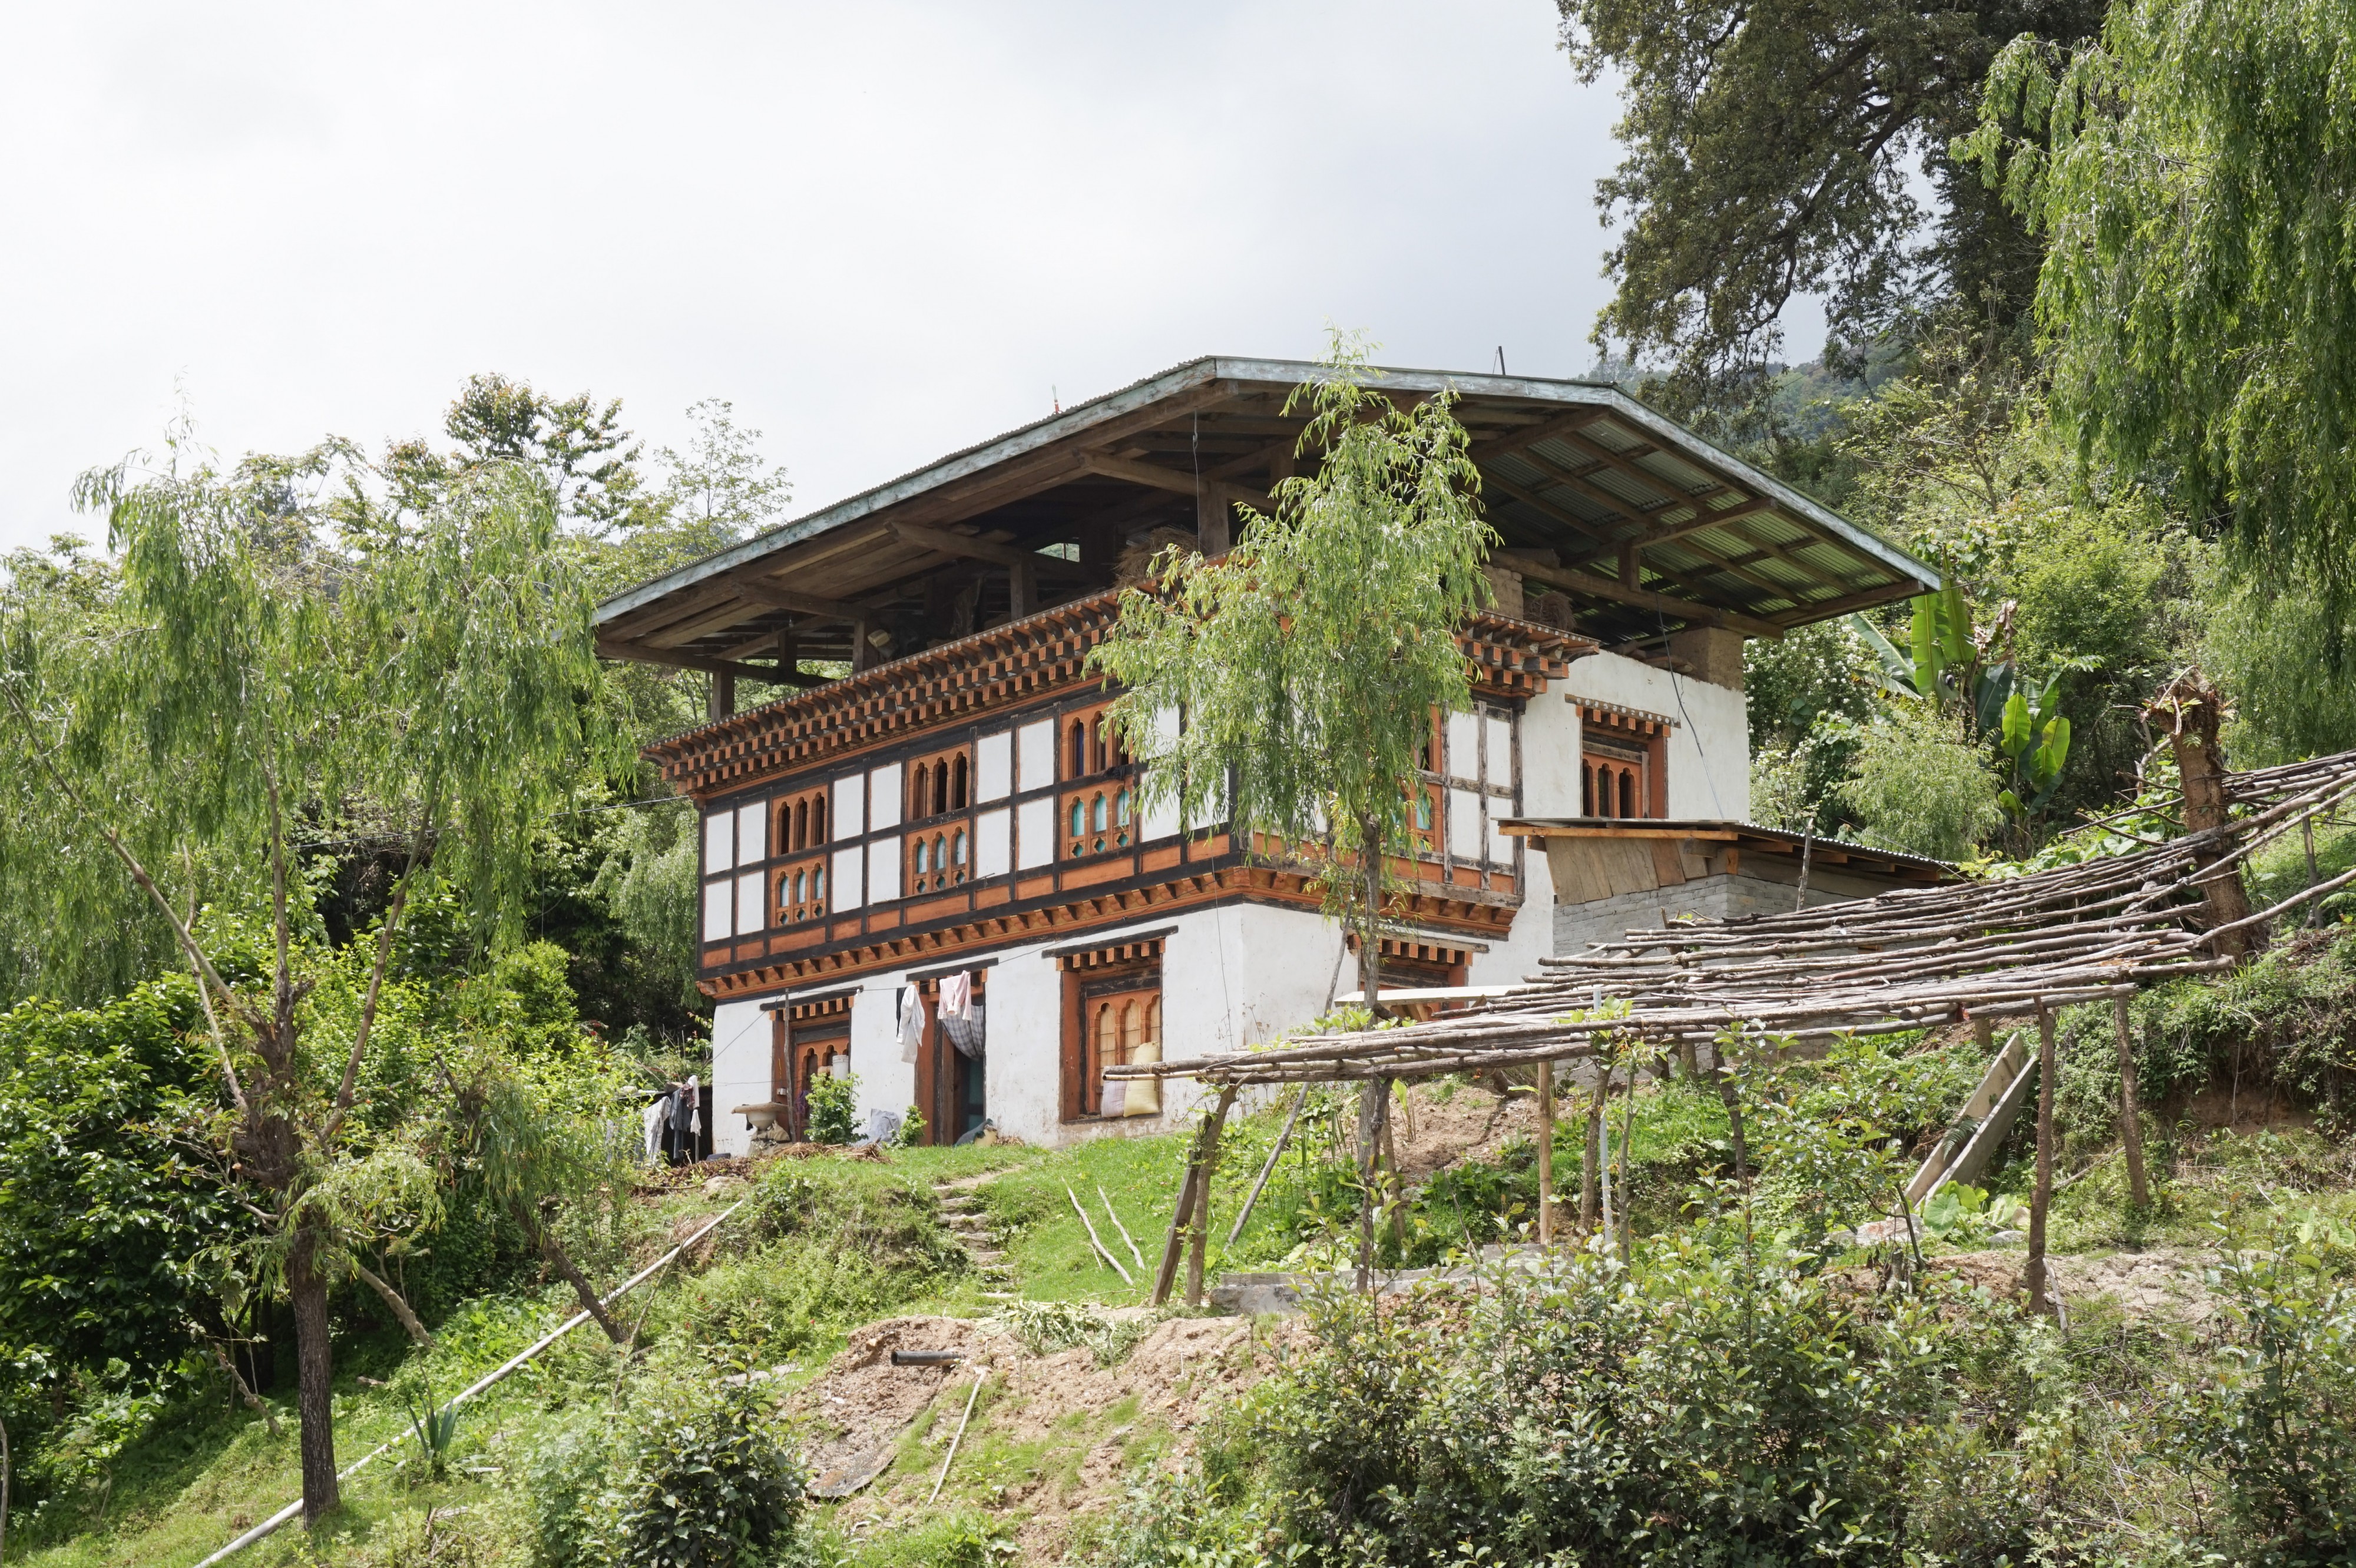 House in Bhutan 02